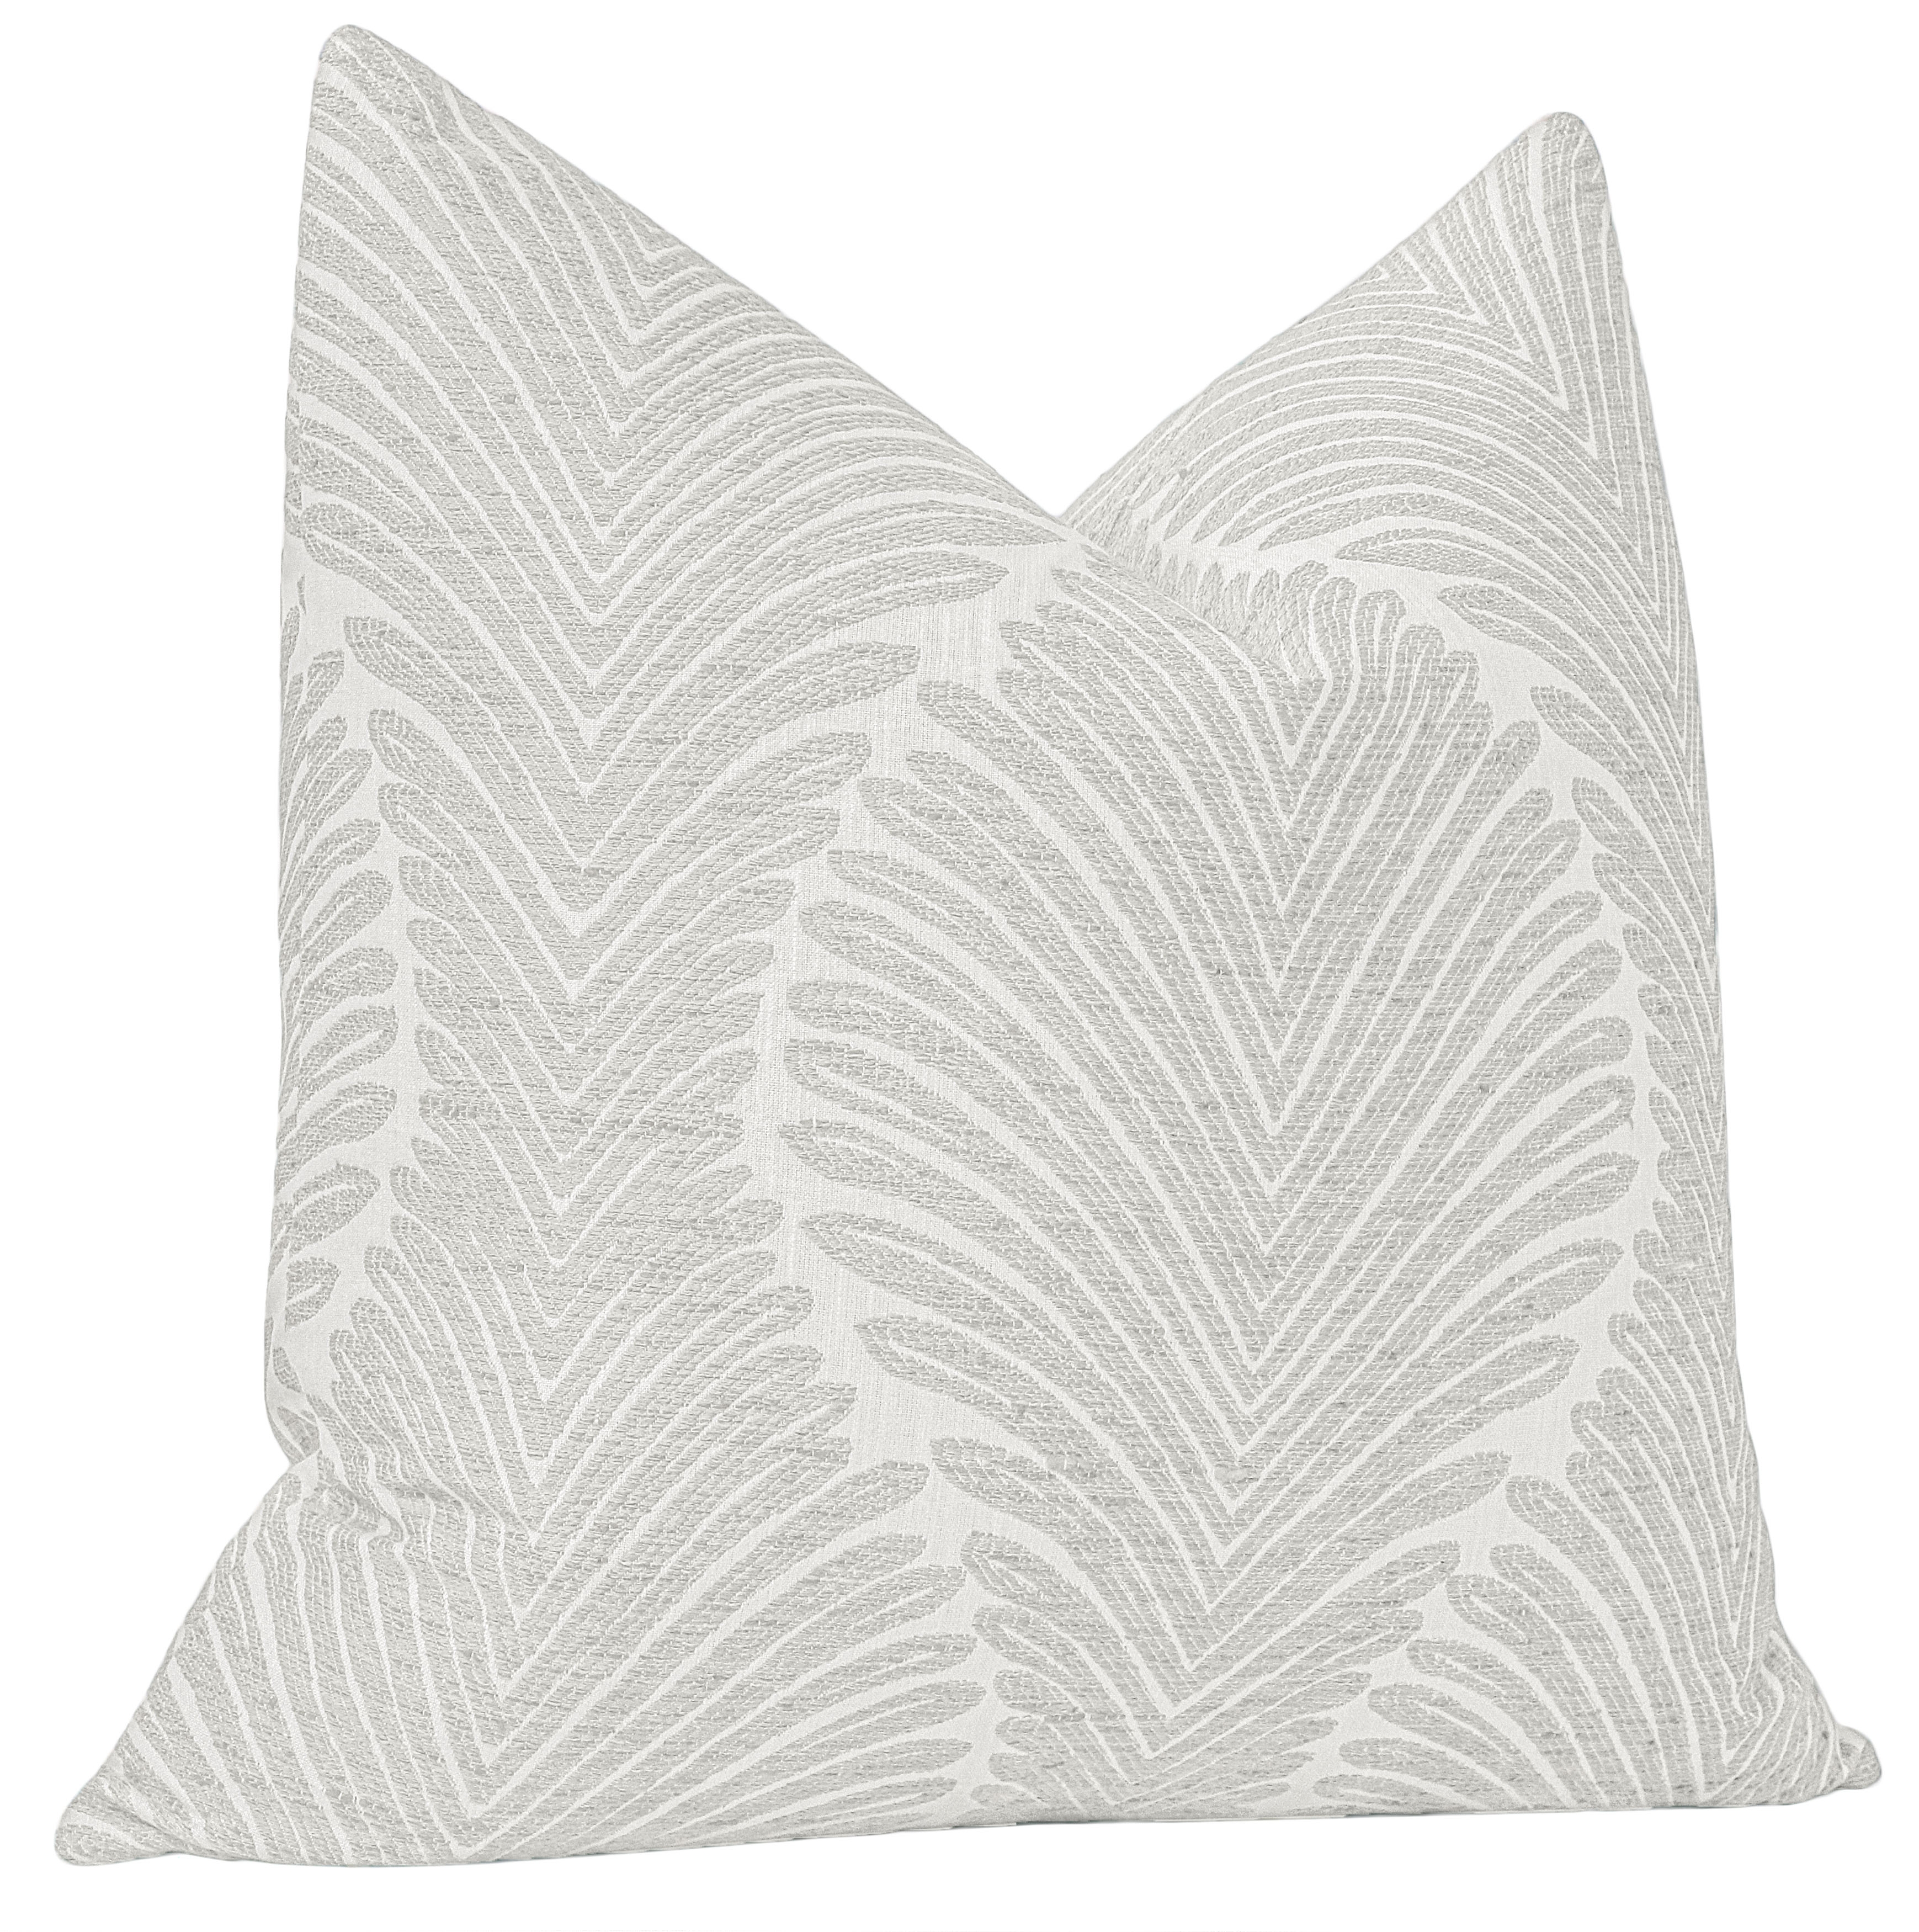 Musgrove Chenille Throw Pillow Cover, Dove Gray, 20" x 20" - Image 2